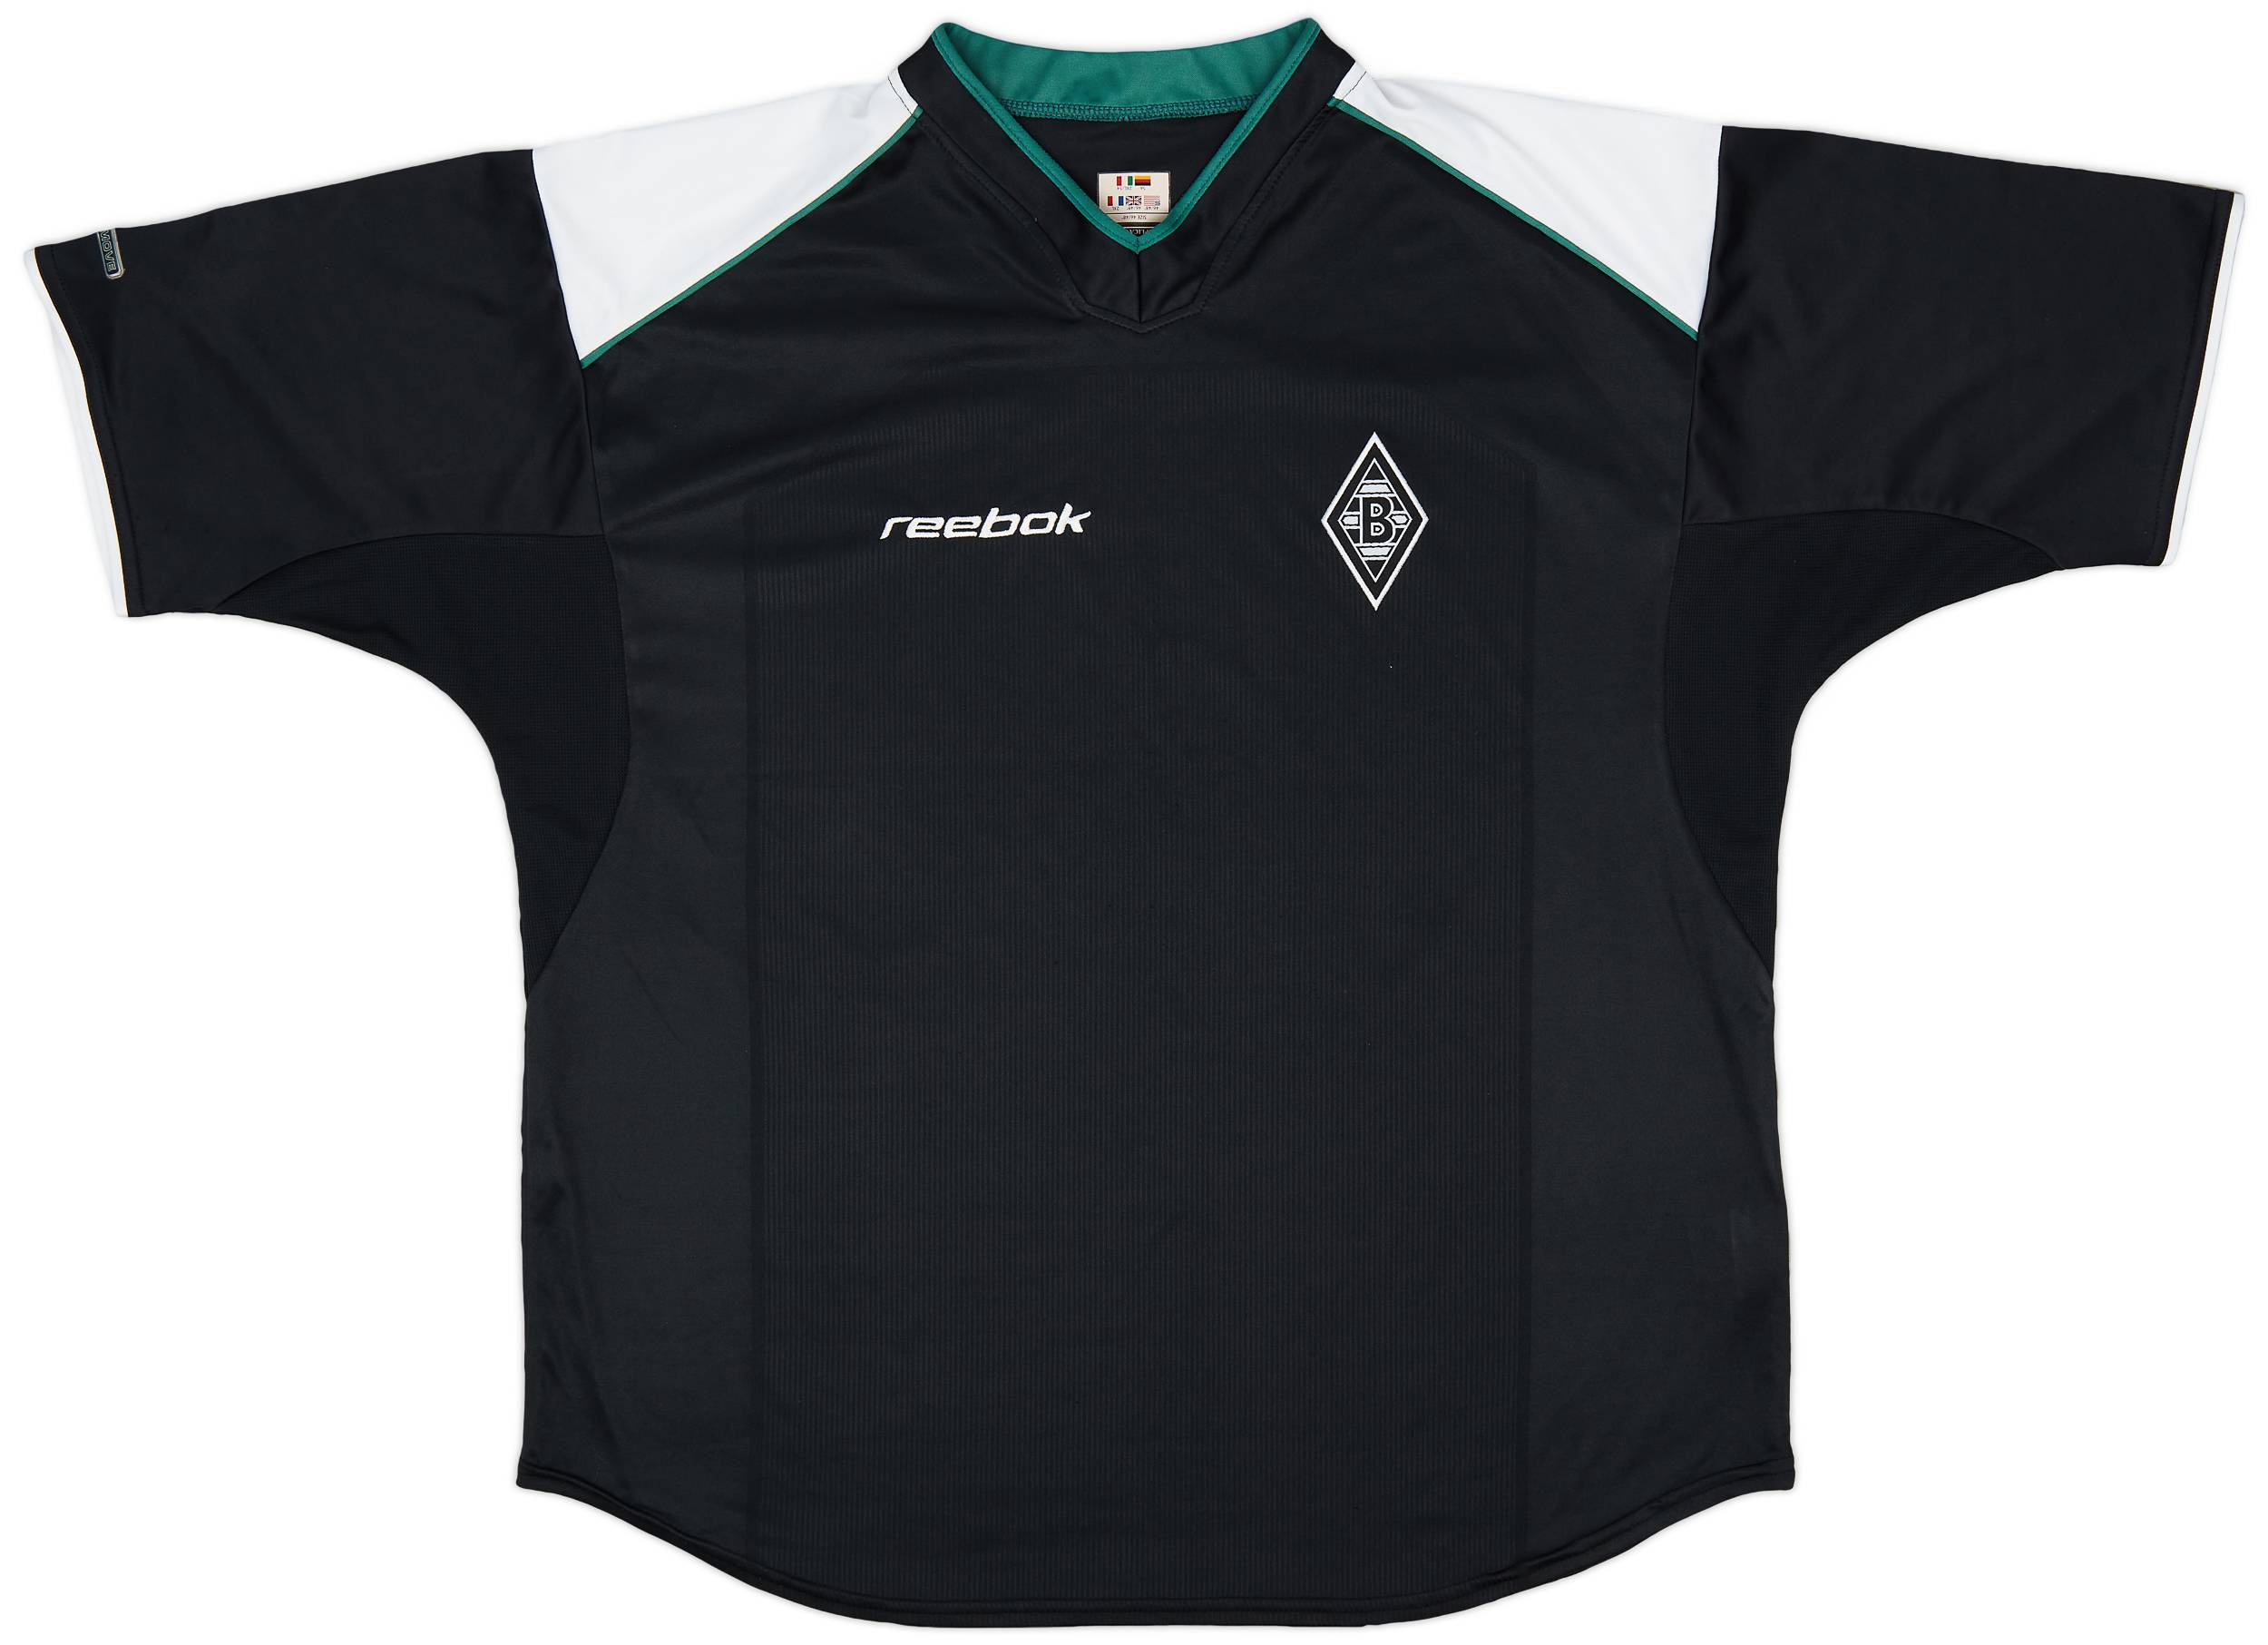 2003-04 Borussia Monchengladbach Reebok Training Shirt - 9/10 - (XL)